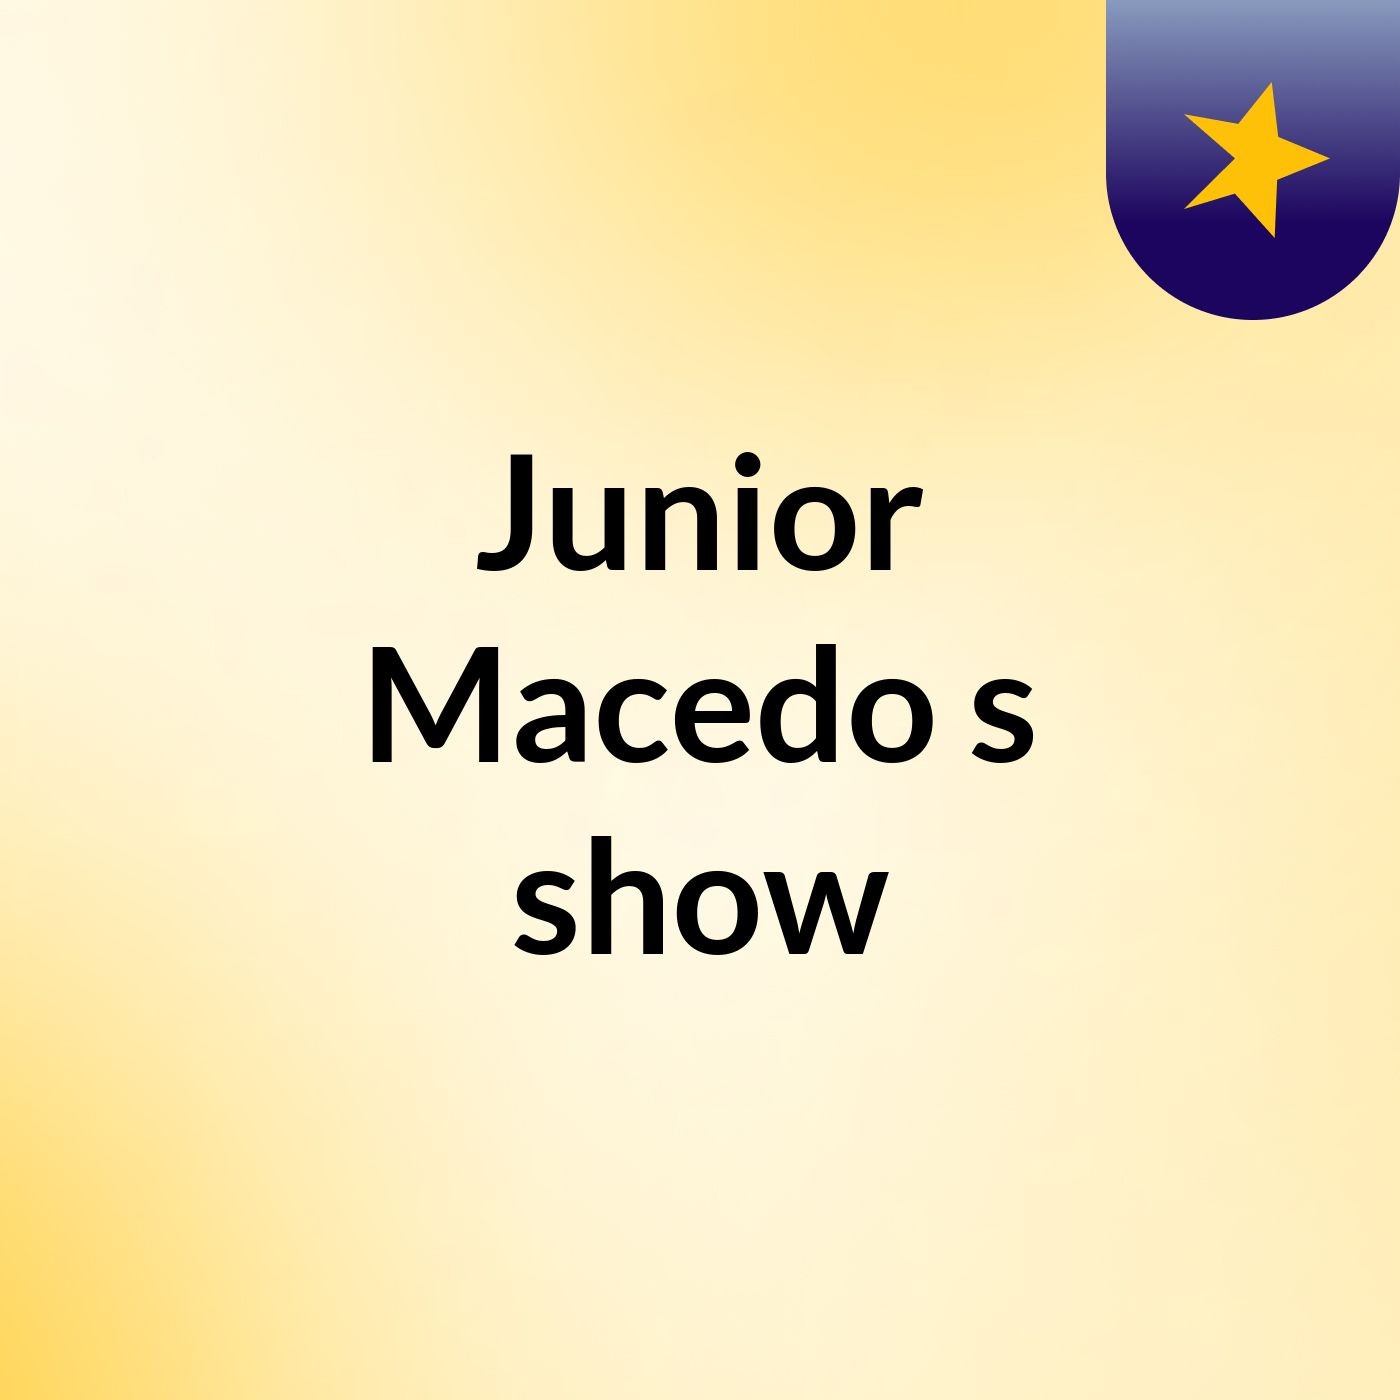 Junior Macedo's show